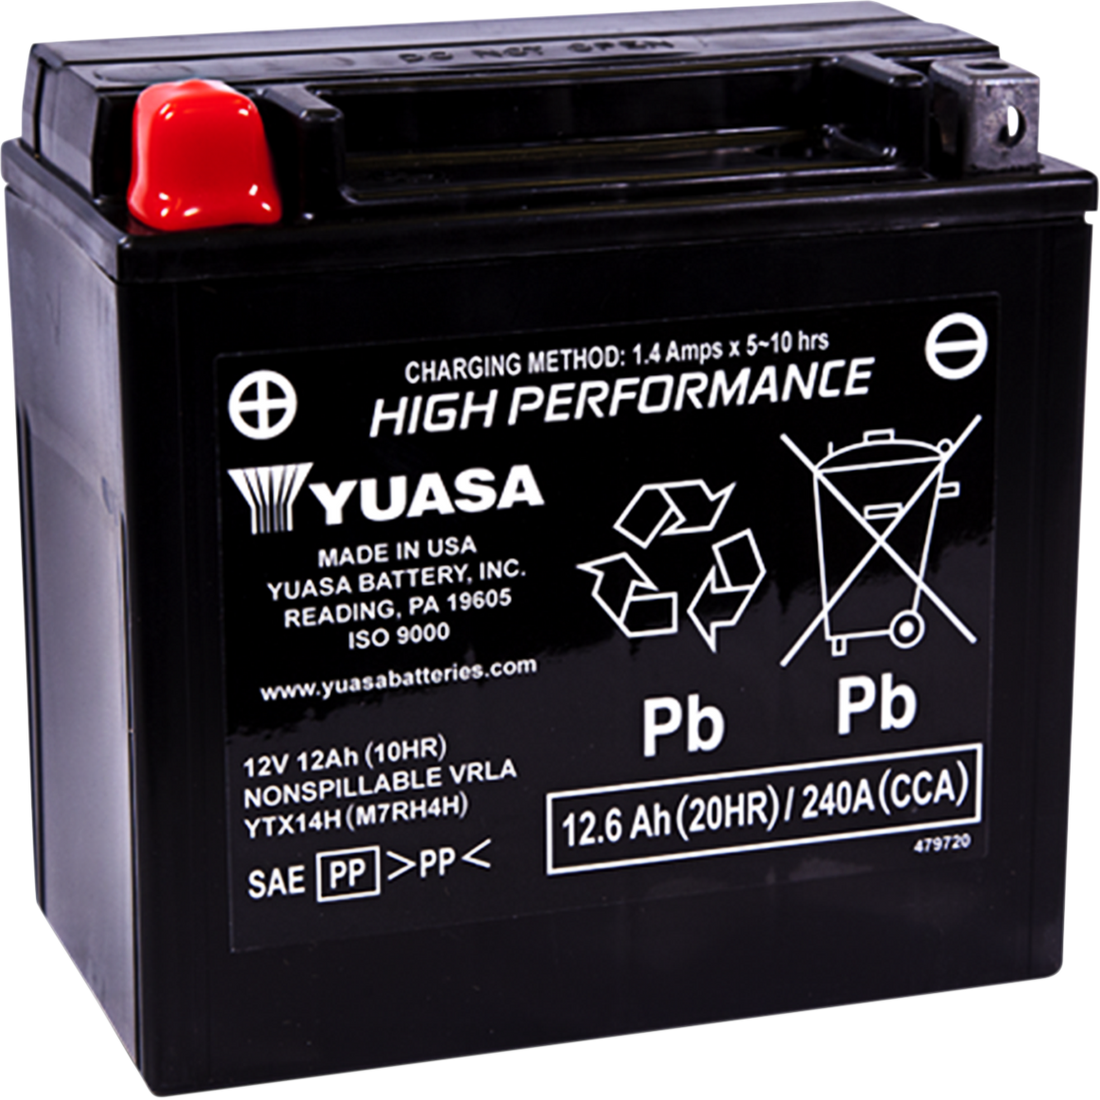 2113-0106 - YUASA AGM Battery - YTX14H YUAM7RH4H